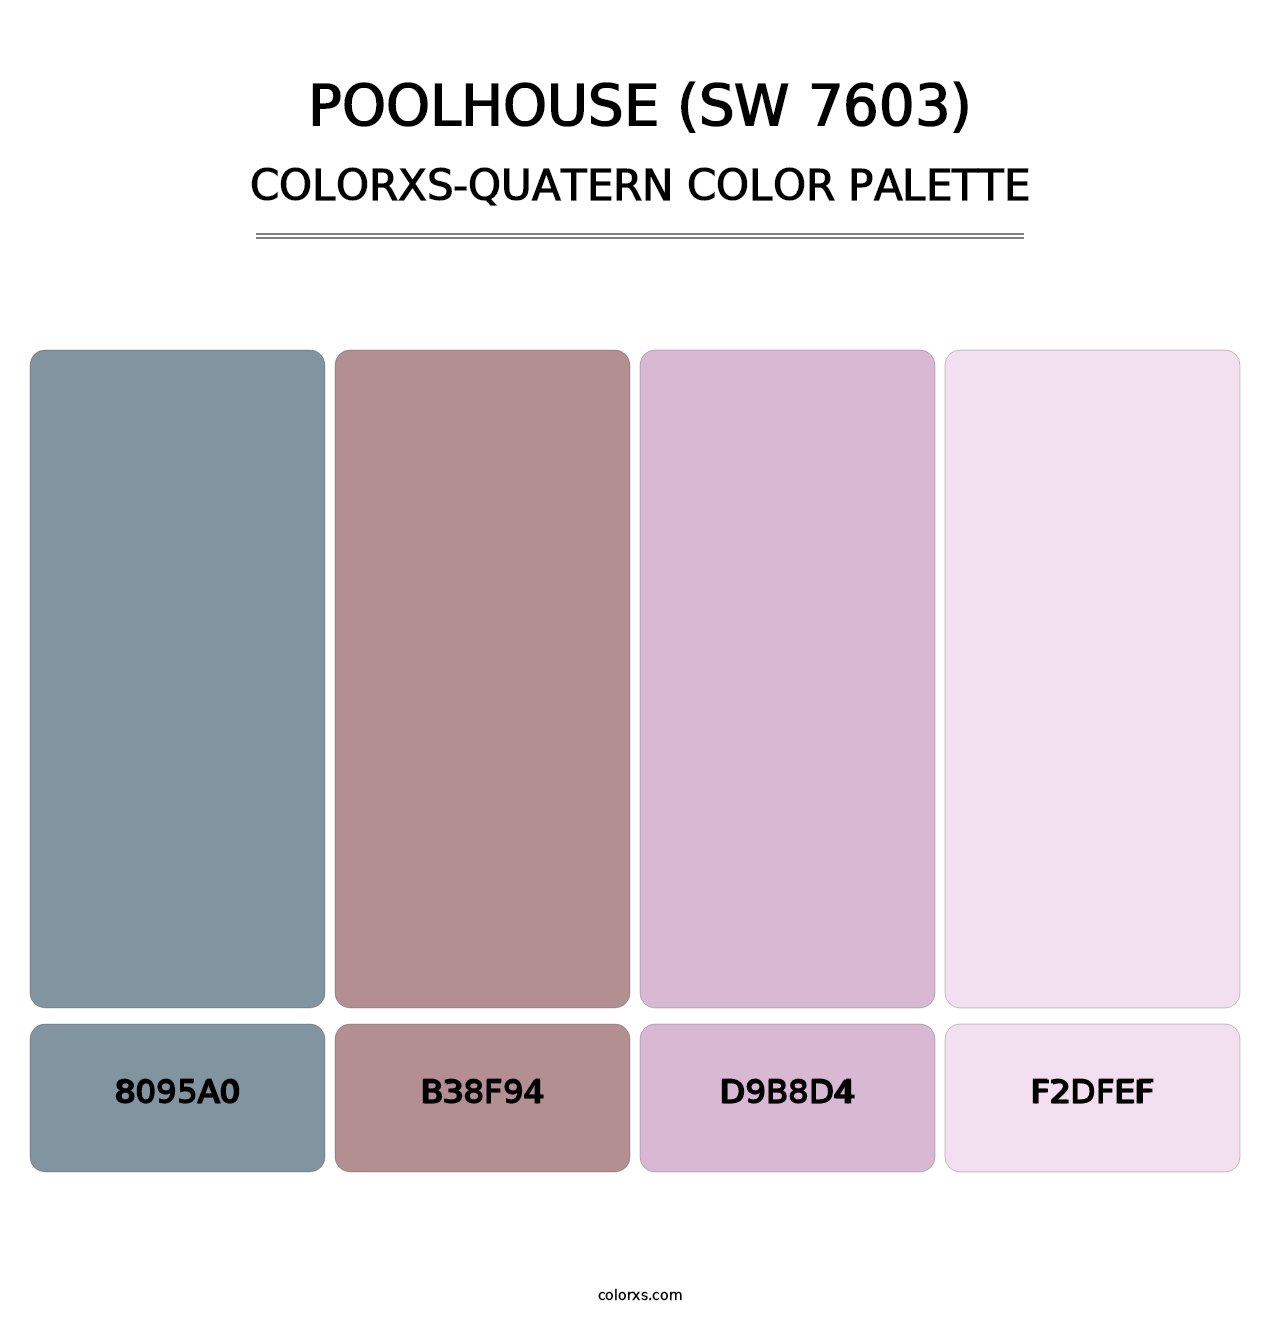 Poolhouse (SW 7603) - Colorxs Quatern Palette